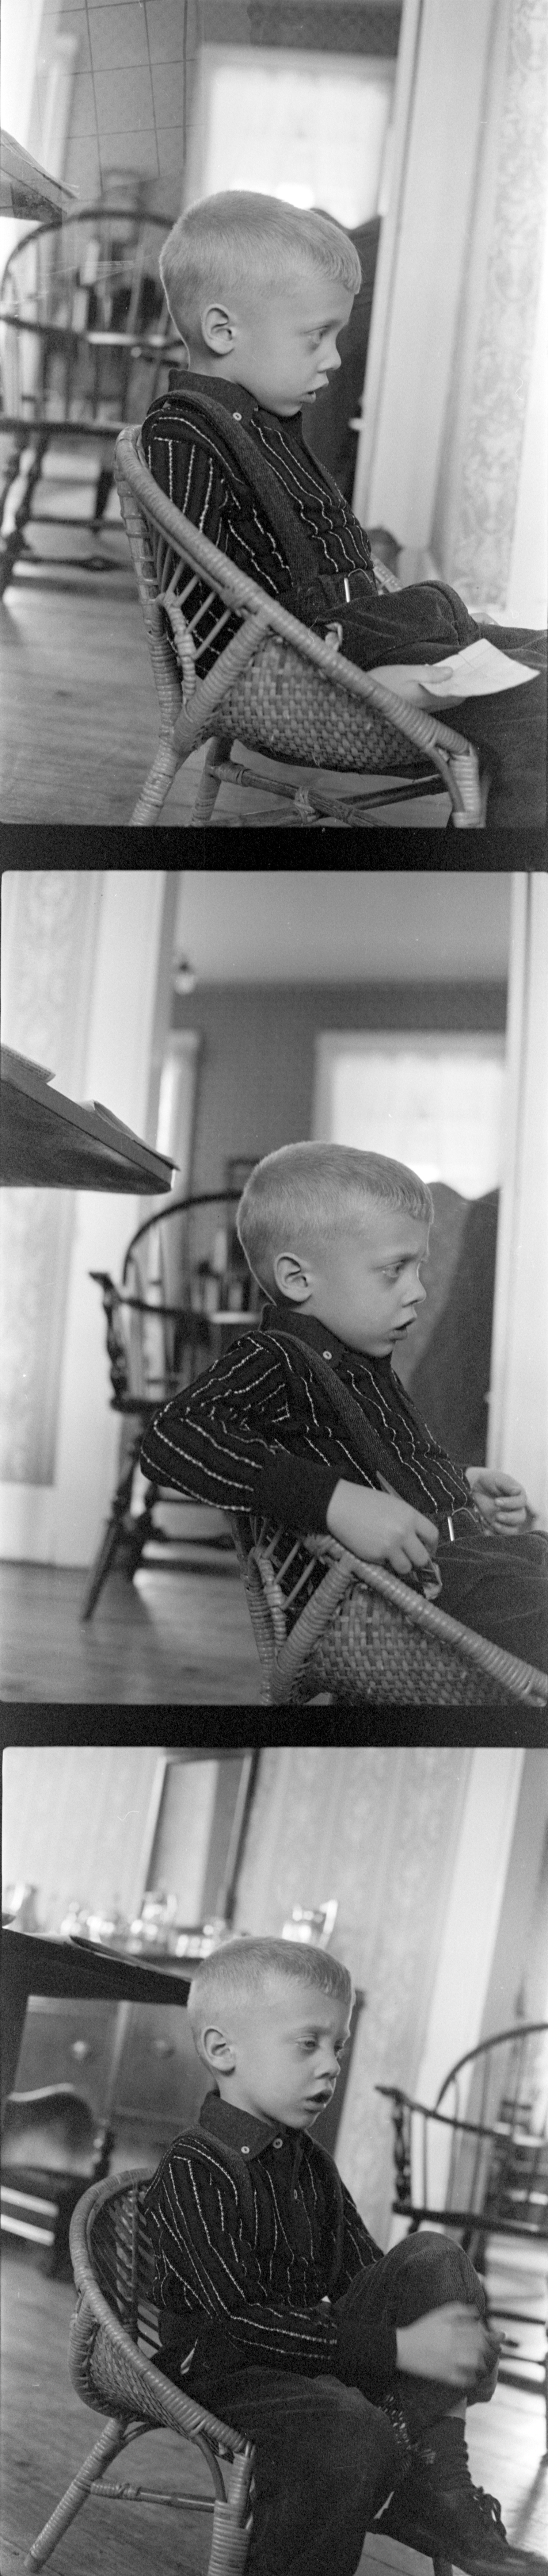 Joe-Watching-TV-in-Childs-Wicker-Chair-Triptych